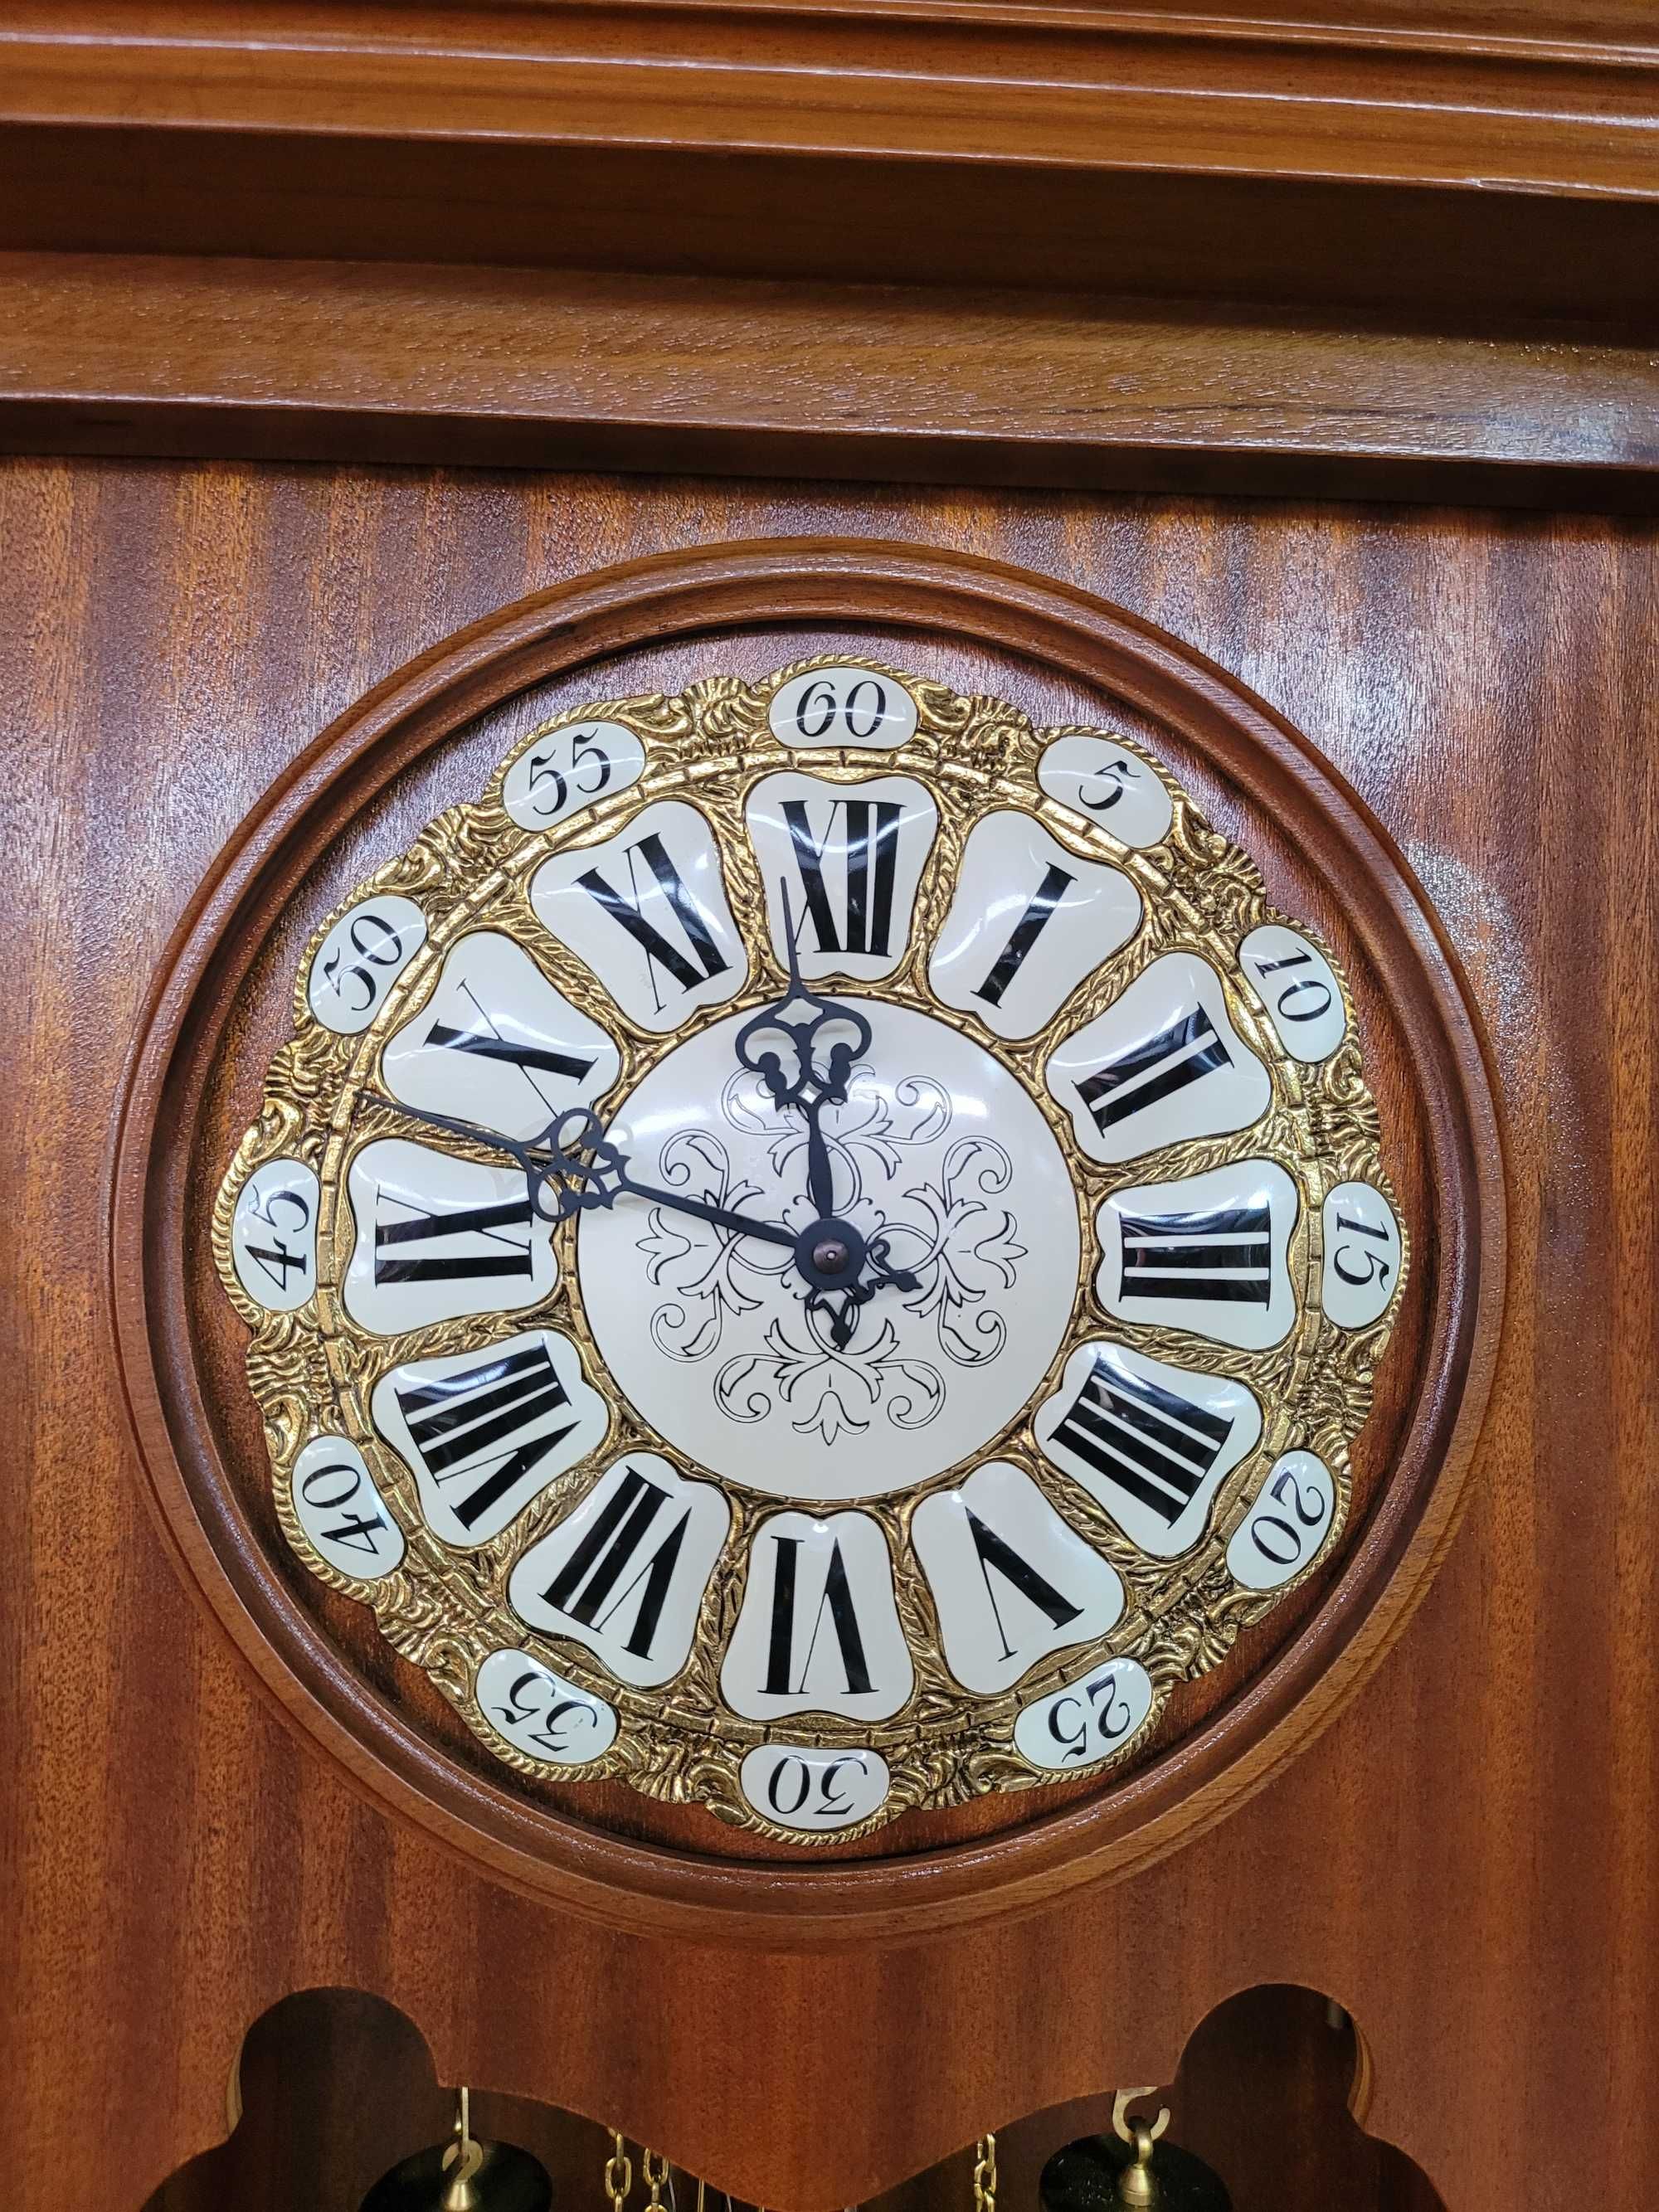 Encantador enorme relógio de pendulo - vendido com ga